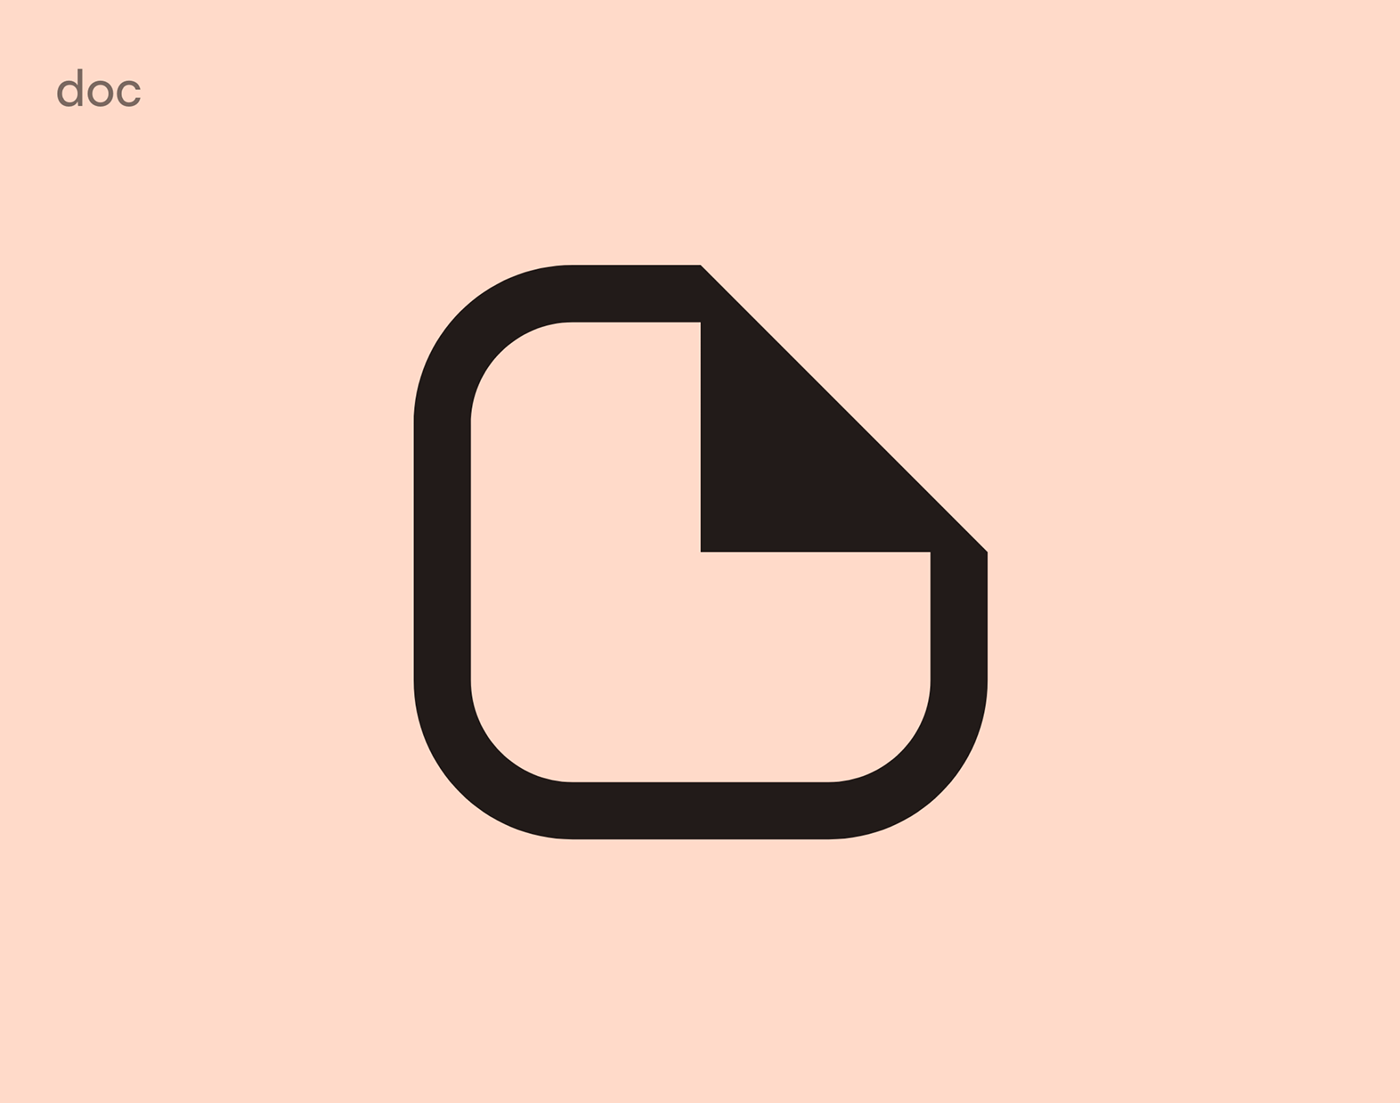 file types Files icons pictograms minimal icon set attachments NOZBE symbols